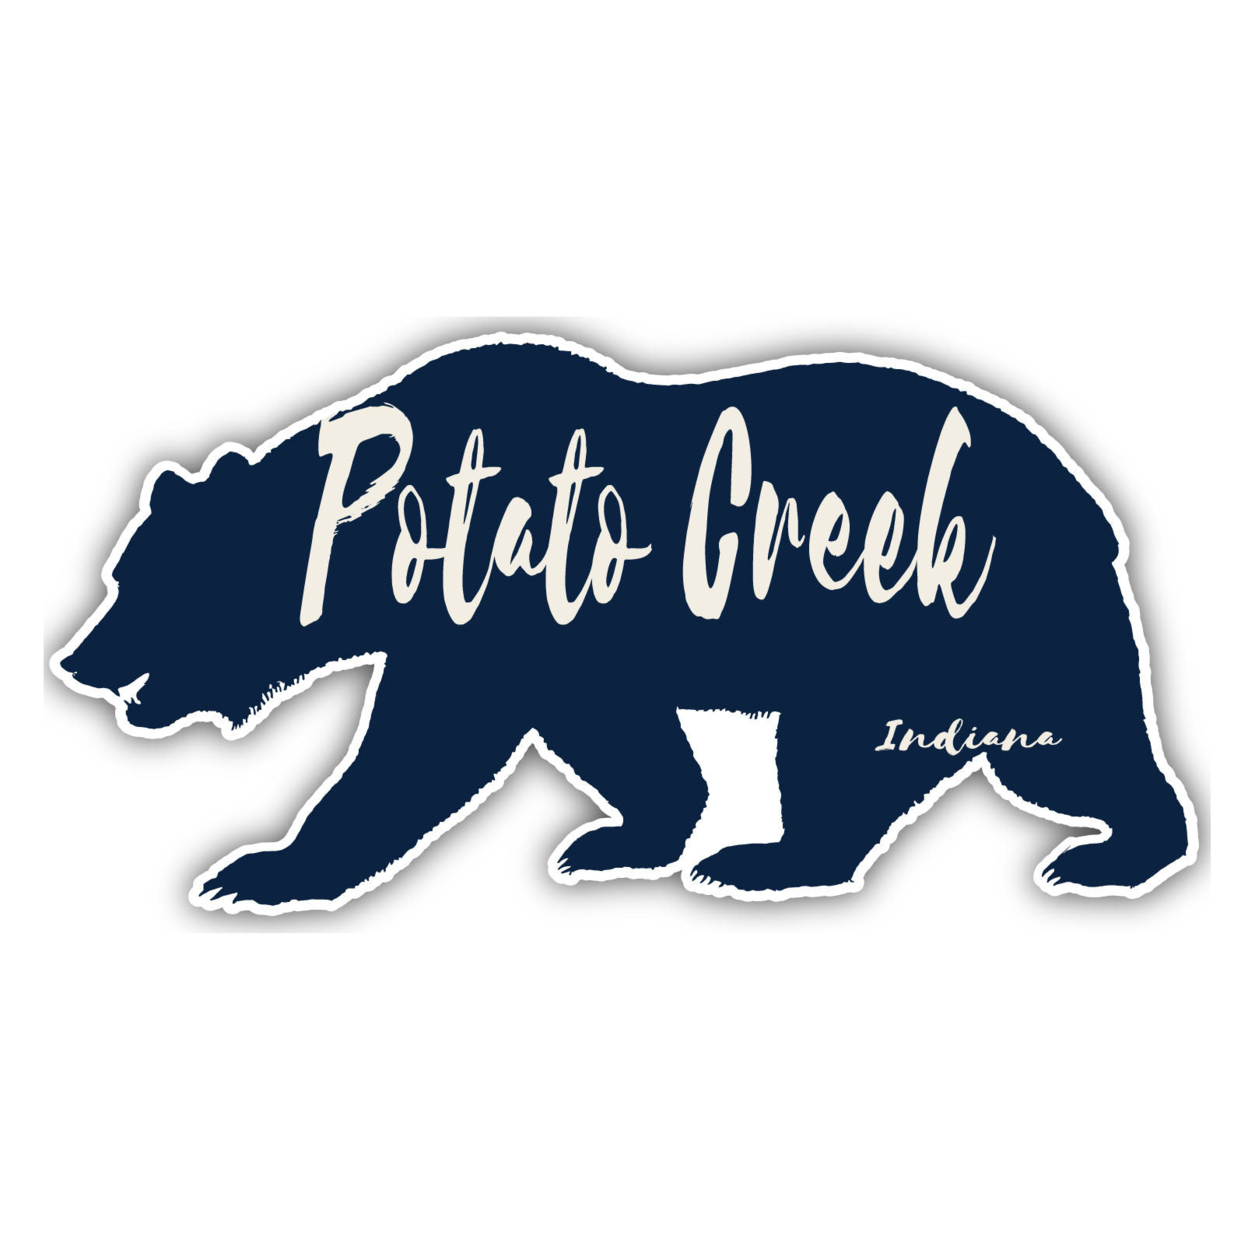 Potato Creek Indiana Souvenir Decorative Stickers (Choose Theme And Size) - Single Unit, 2-Inch, Bear